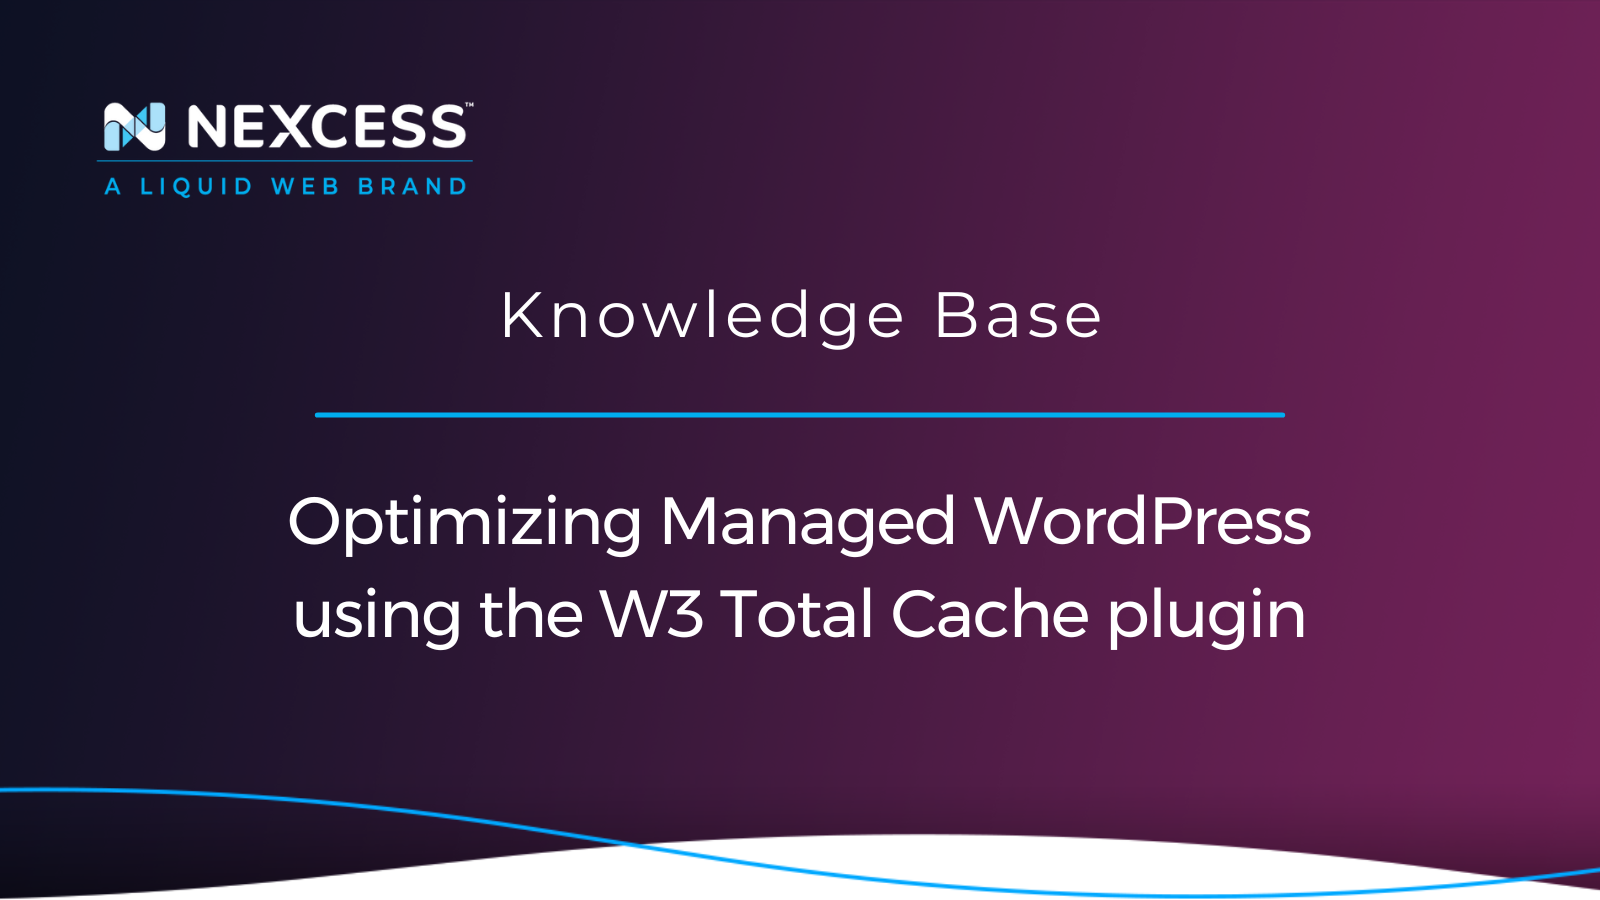 Optimizing Managed WordPress using the W3 Total Cache plugin